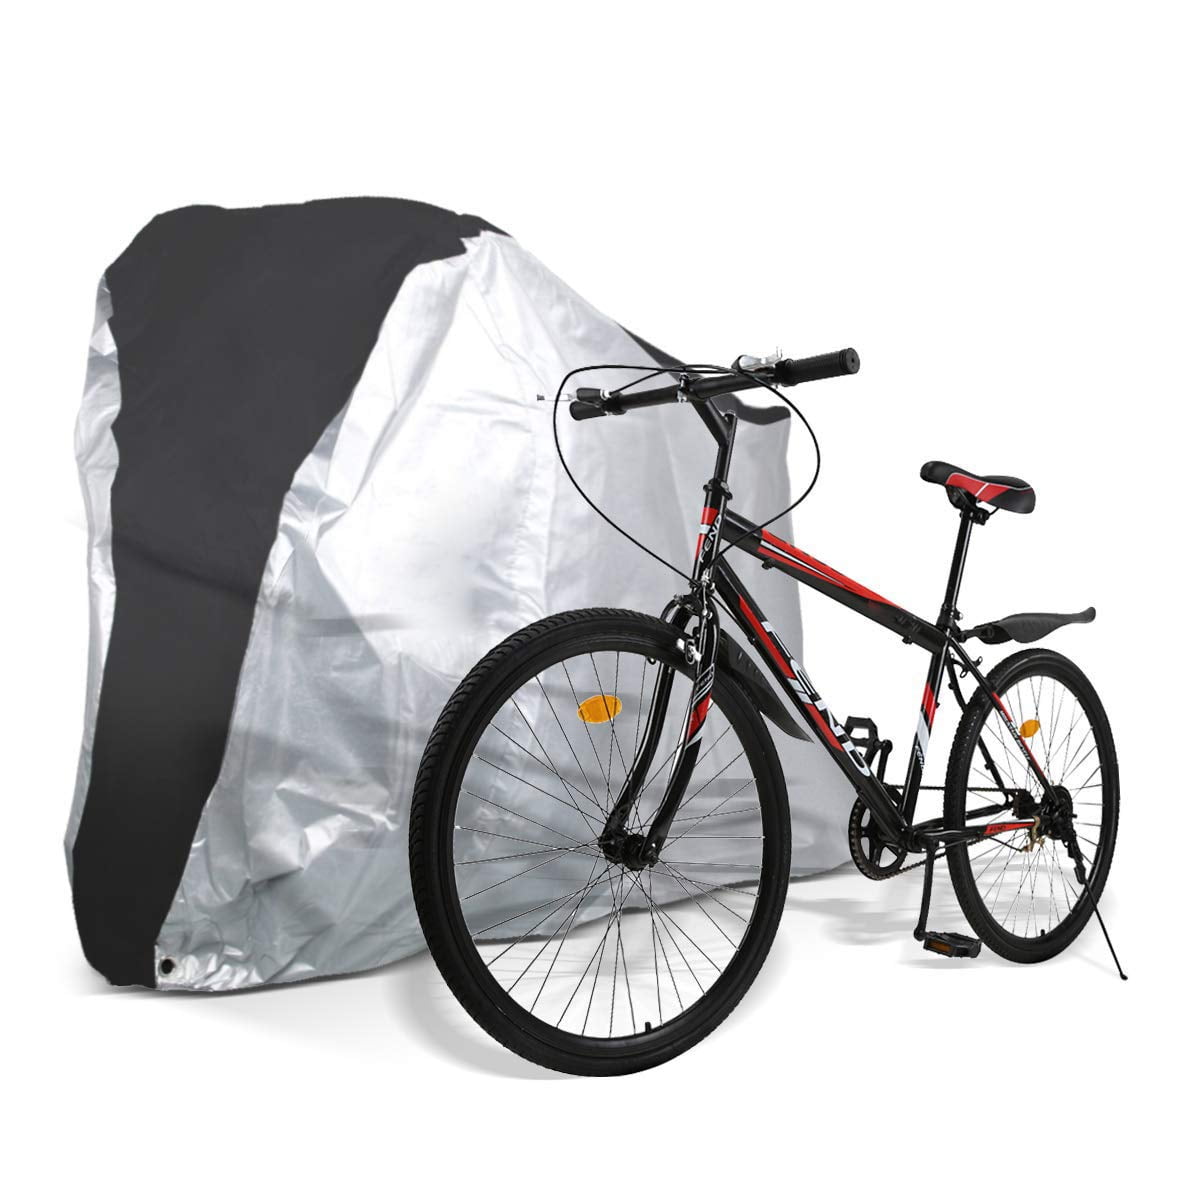 Waterproof Nylon Bicycle Cycle Bike Cover Outdoor Rain Dust bask Protector 